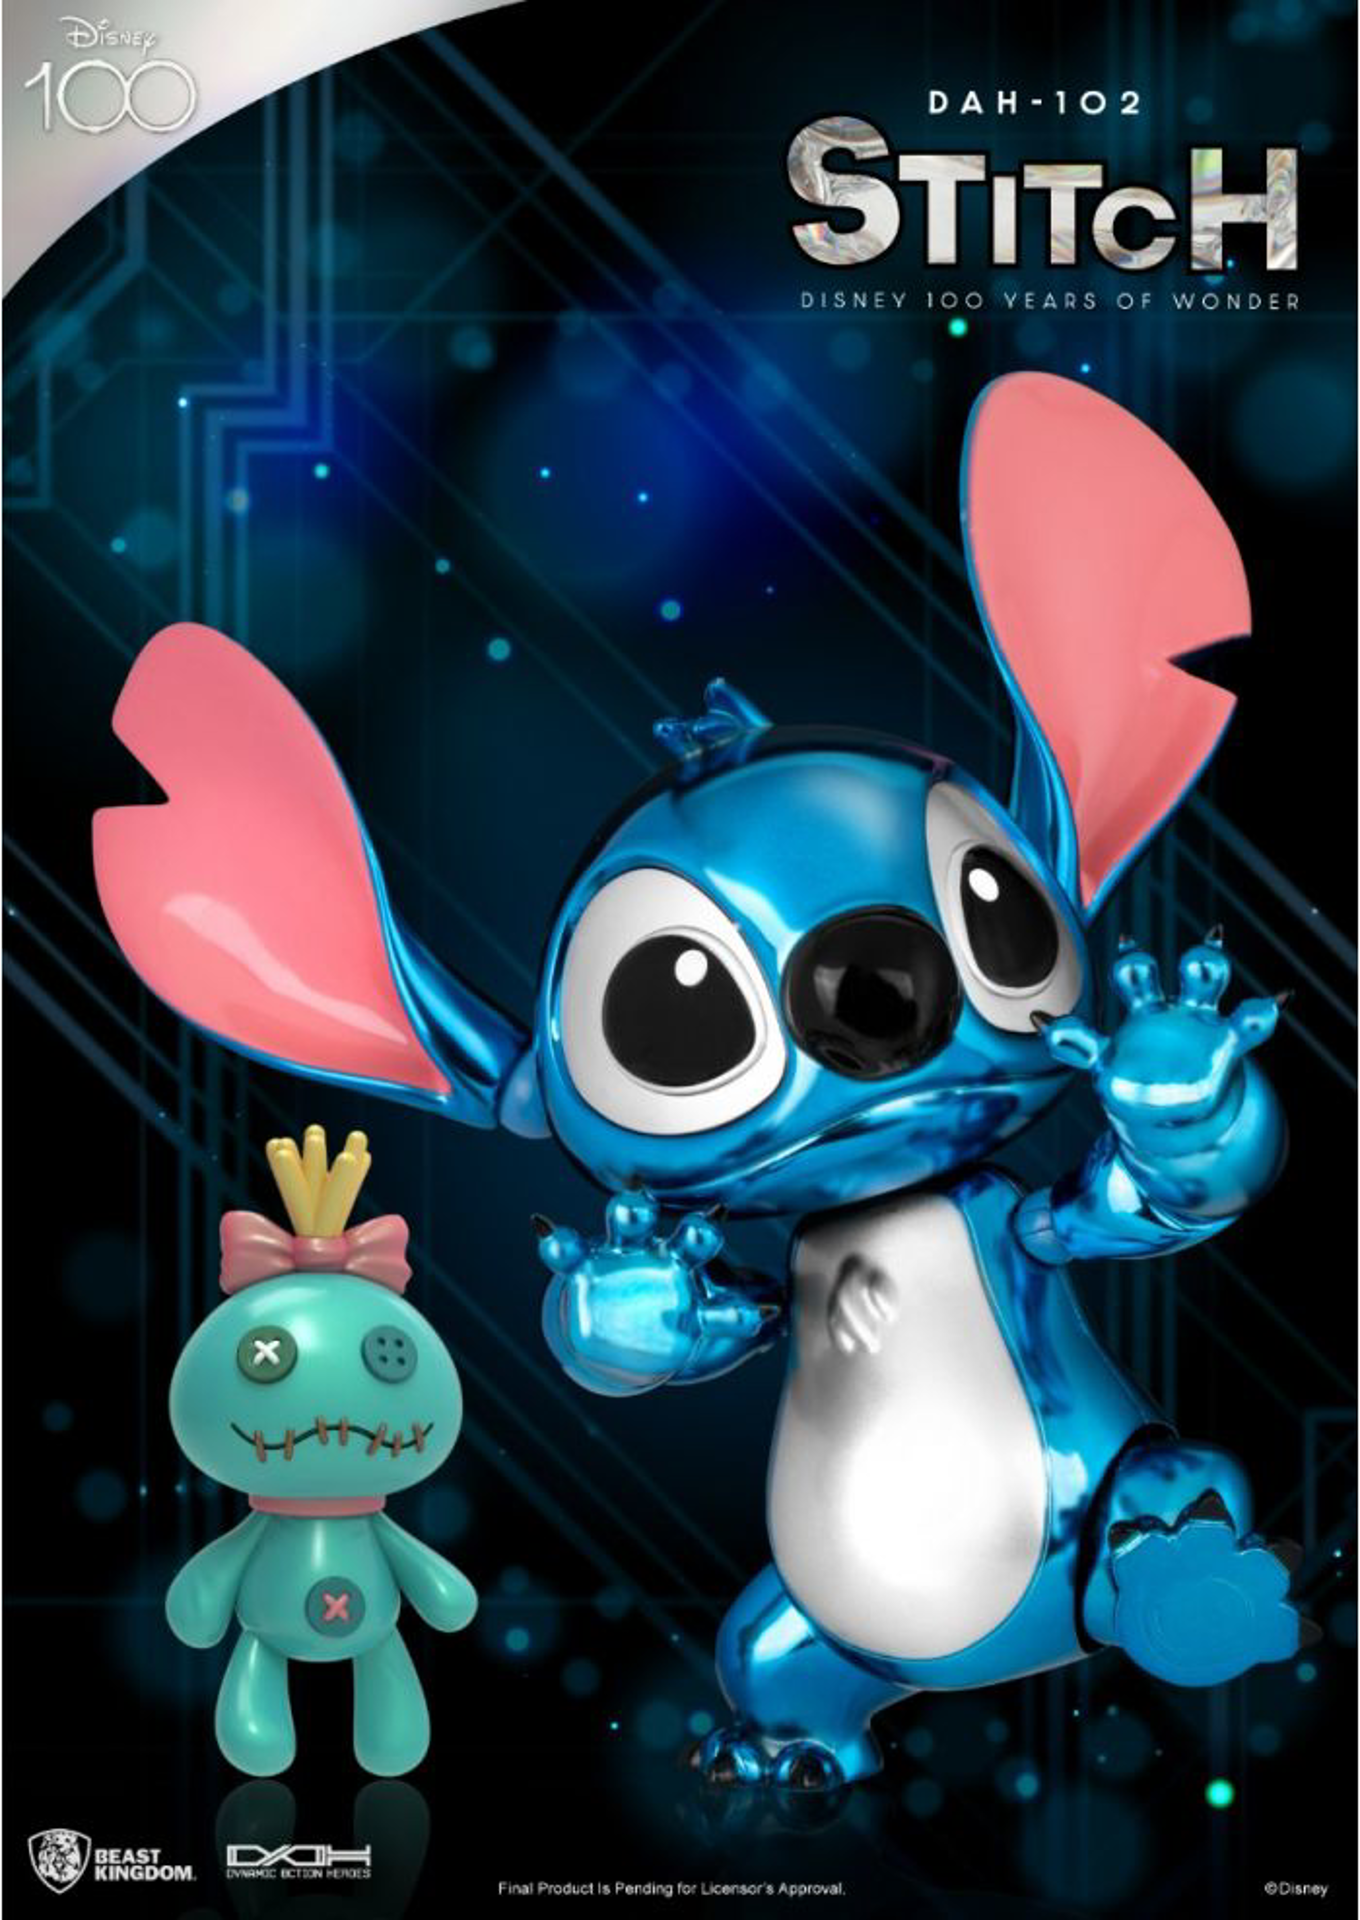 Disney - DAH-102 - Disney 100th Years of Wonder - Stitch